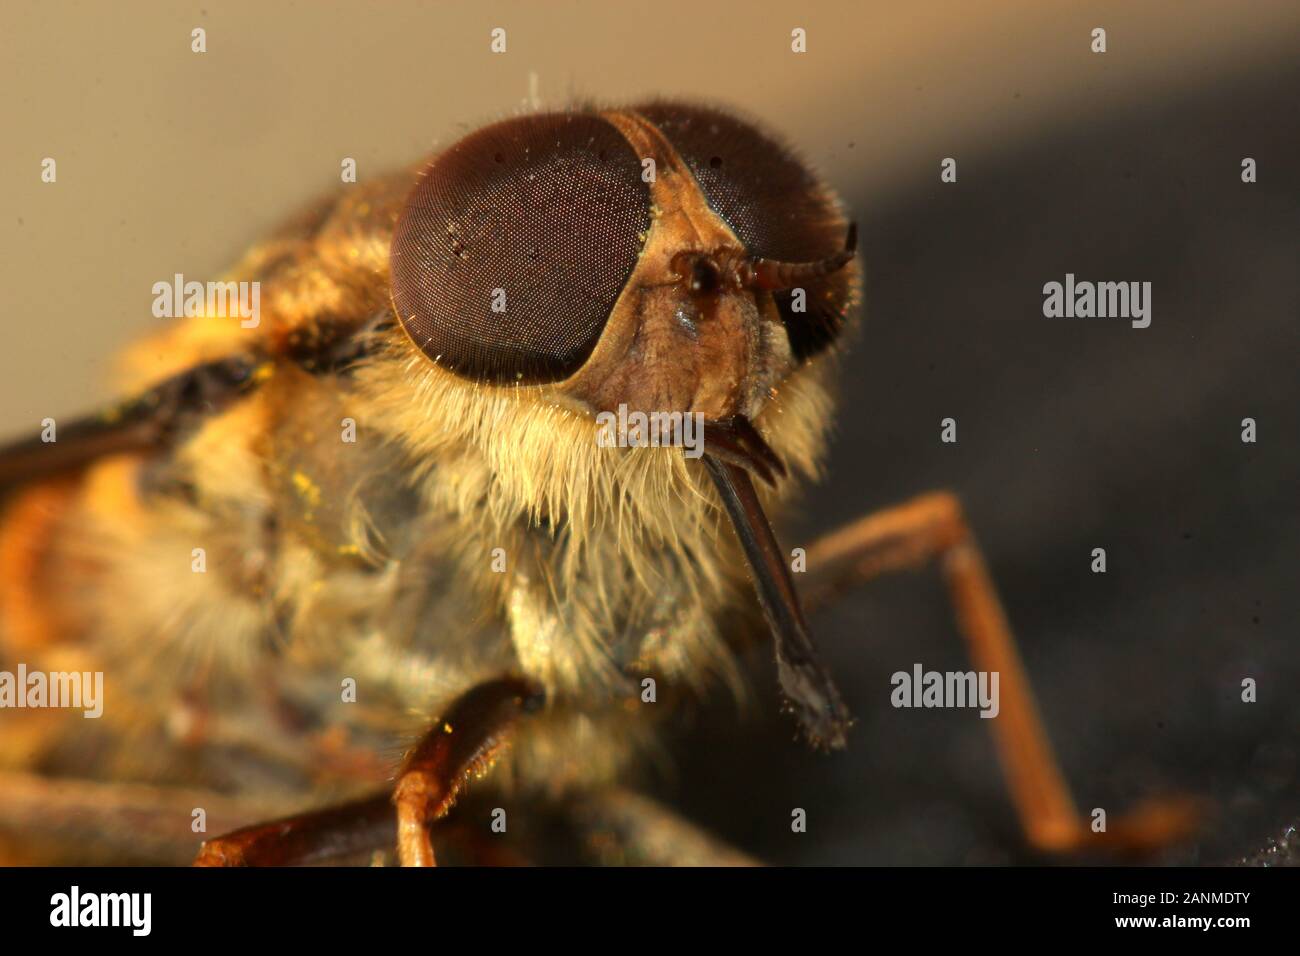 Portrait of a Hoverfly (Eristalis tenax) Stock Photo